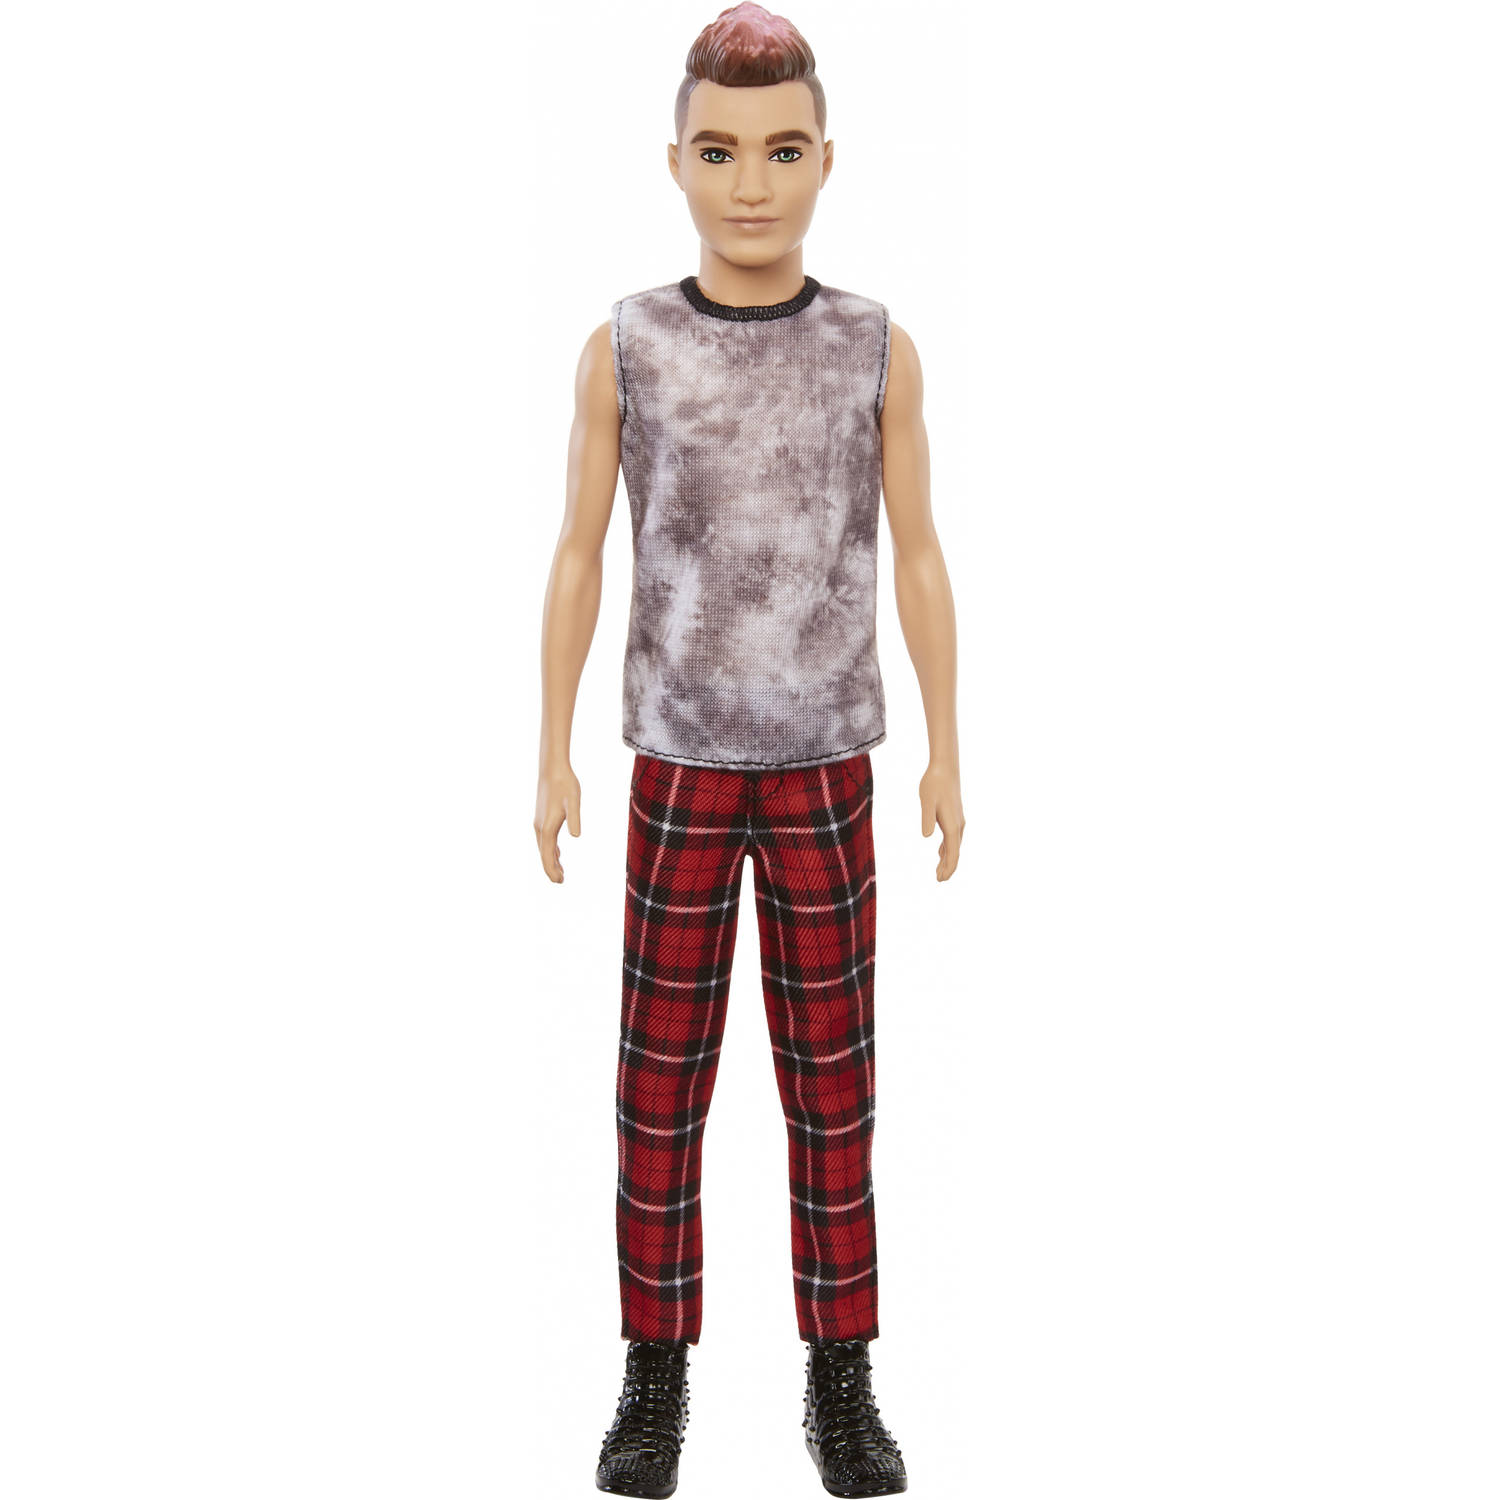 Barbie Ken Fashionista Pop - geruitje broek & shirtje